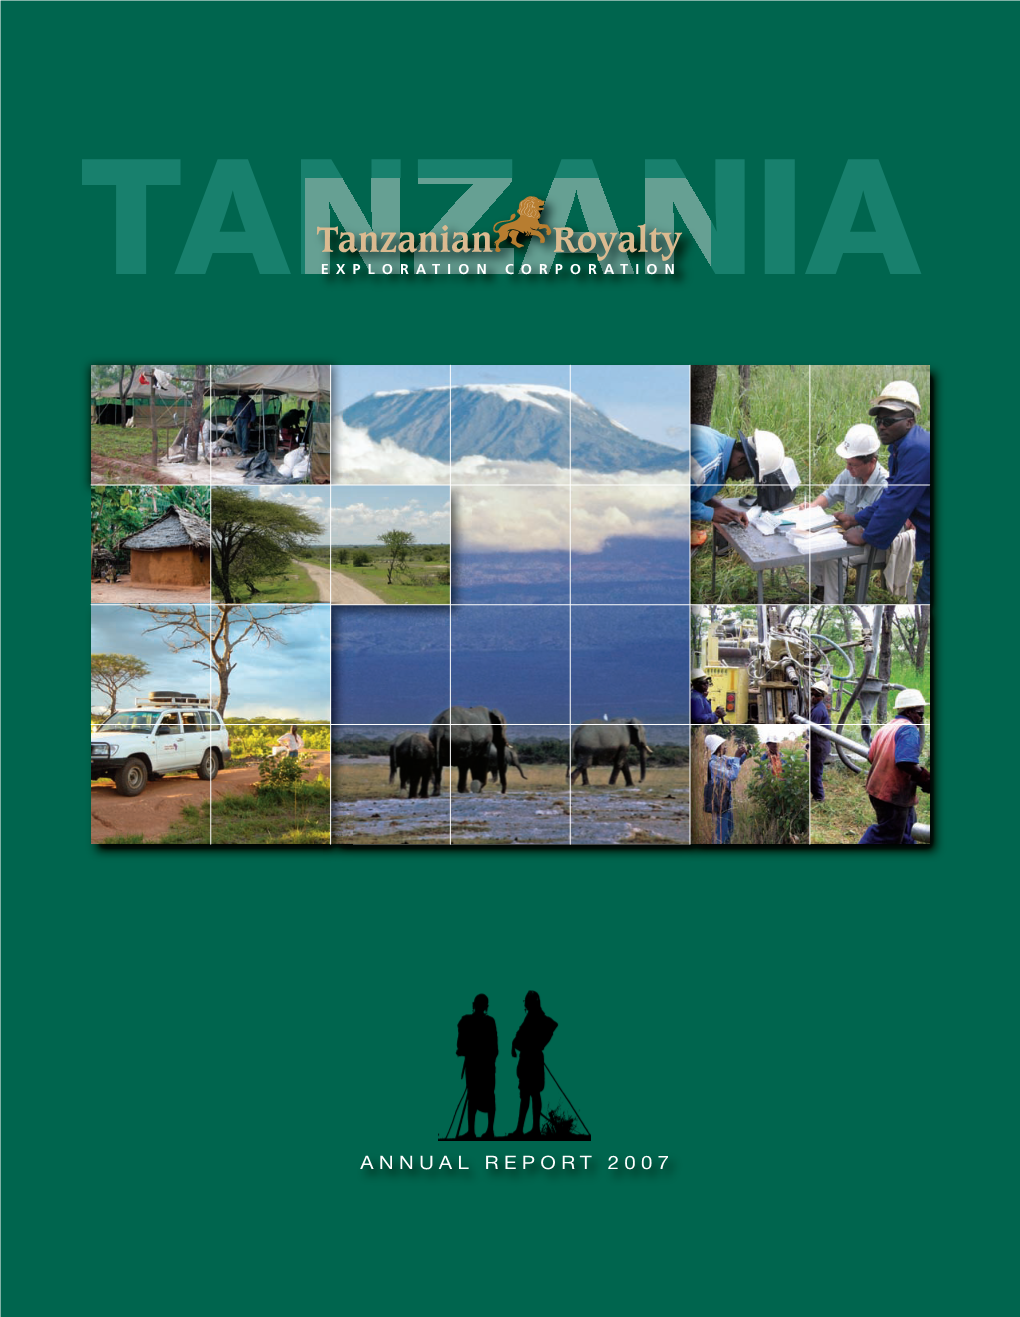 ANNUAL REPORT 2007 56933 Cover.Qxp:Tanzanian Cover Fpr Annual 2007 1/8/08 8:05 AM Page 2